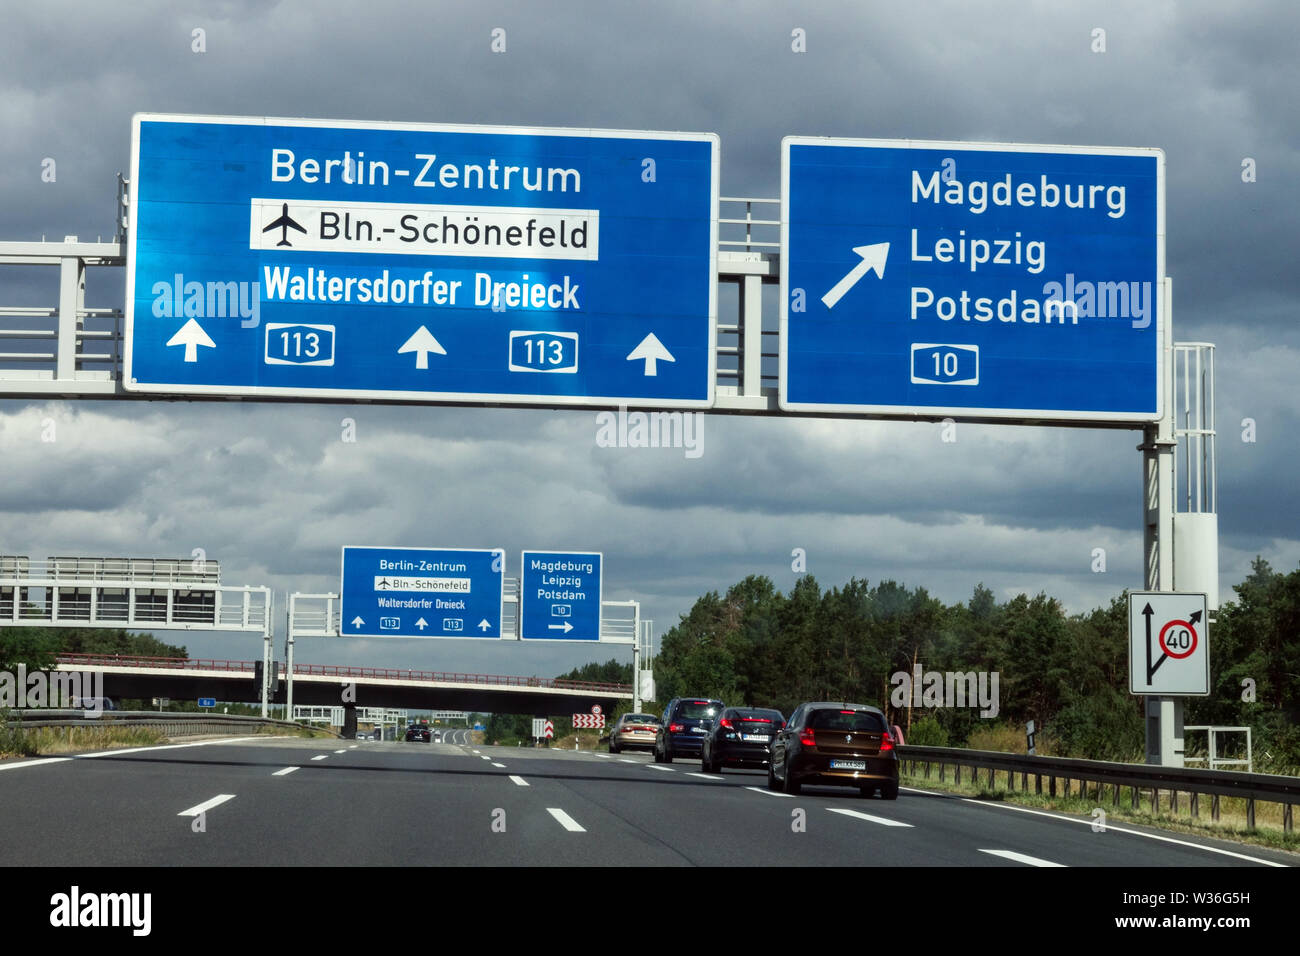 Germany highway sign, traffic multi lane, direction to Berlin, Magdeburg, Leipzig, Potsdam Stock Photo